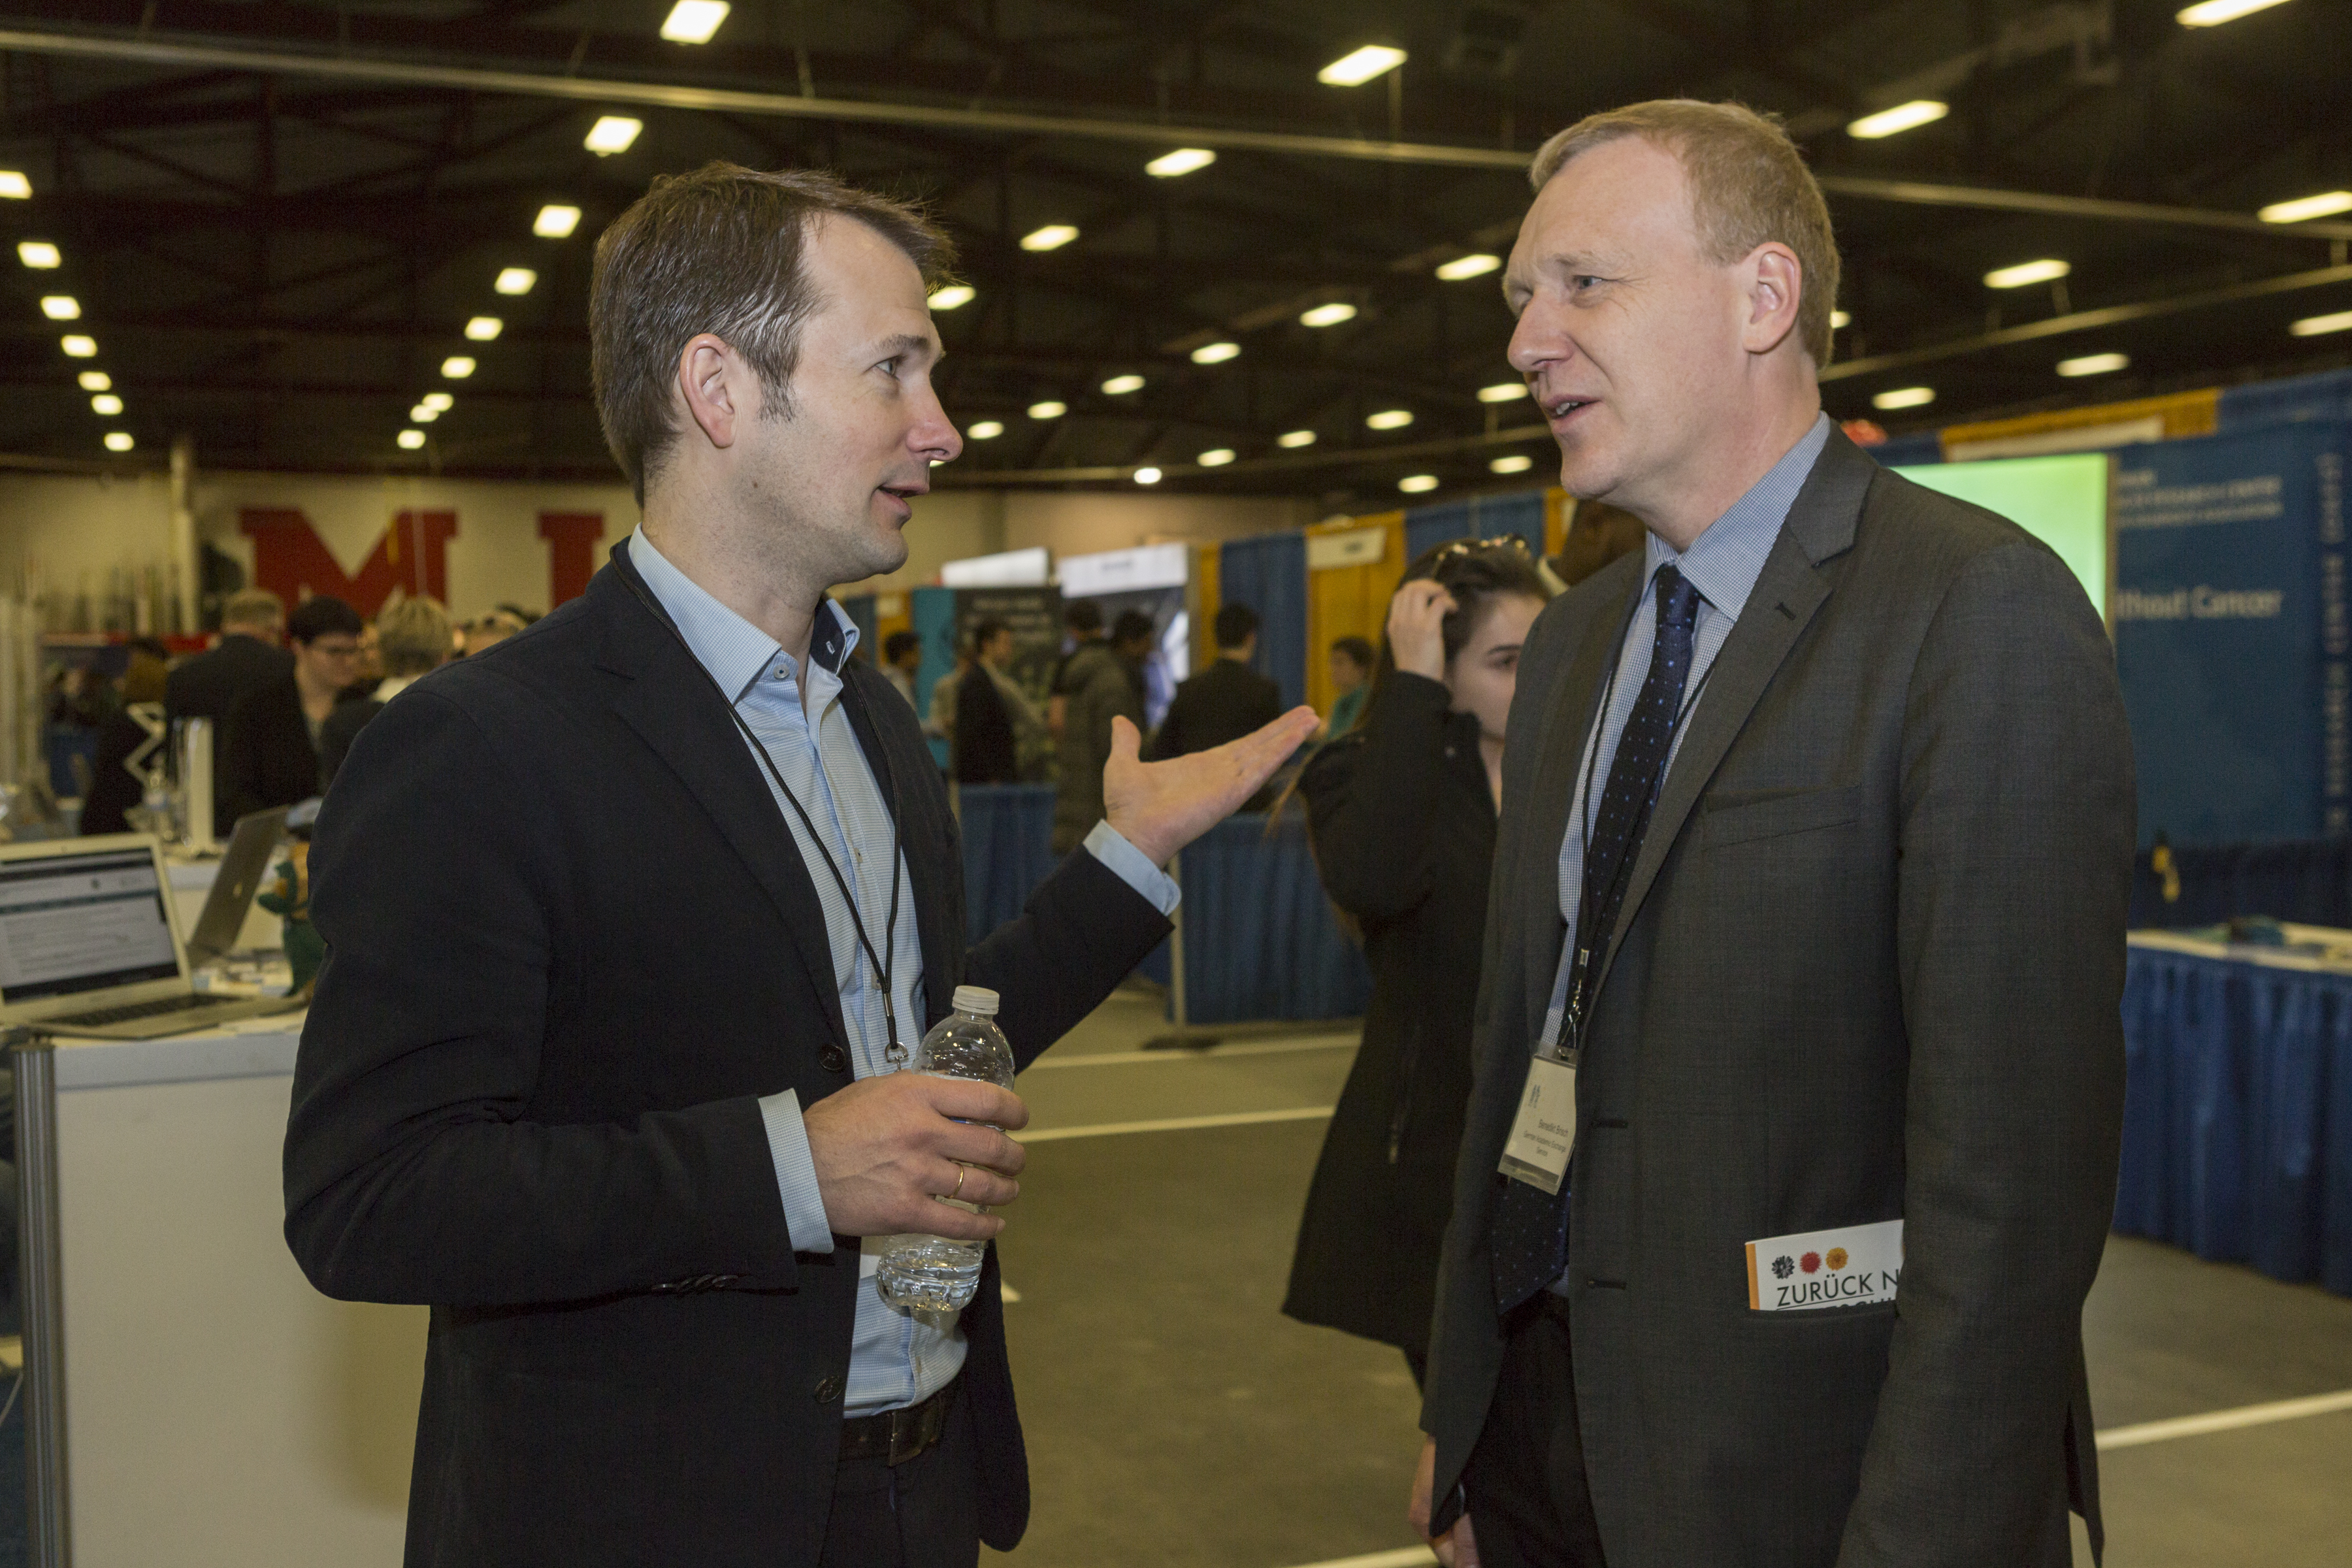 Dr. Rainer Gruhlich, director of the DFG's North America office, and Dr. Benedikt Brisch, director of the DAAD's North America office, in conversation